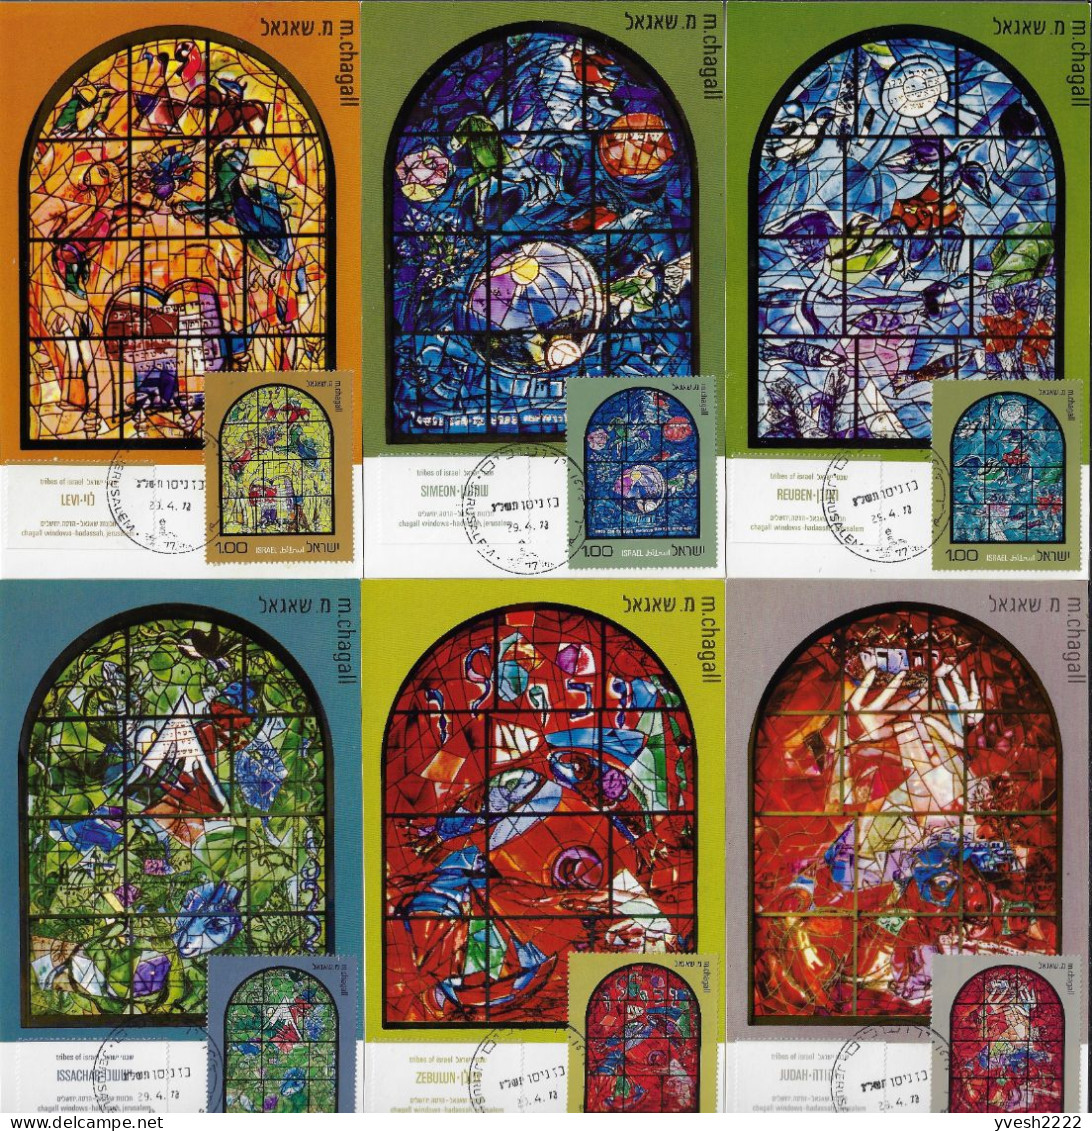 Israël 1973 Y&T 510 à 515. Série Sur CM. Vitraux De Marc Chagall I, Lévi, Siméon, Ruben, Issachar, Zabulon, Juda - Vetri & Vetrate